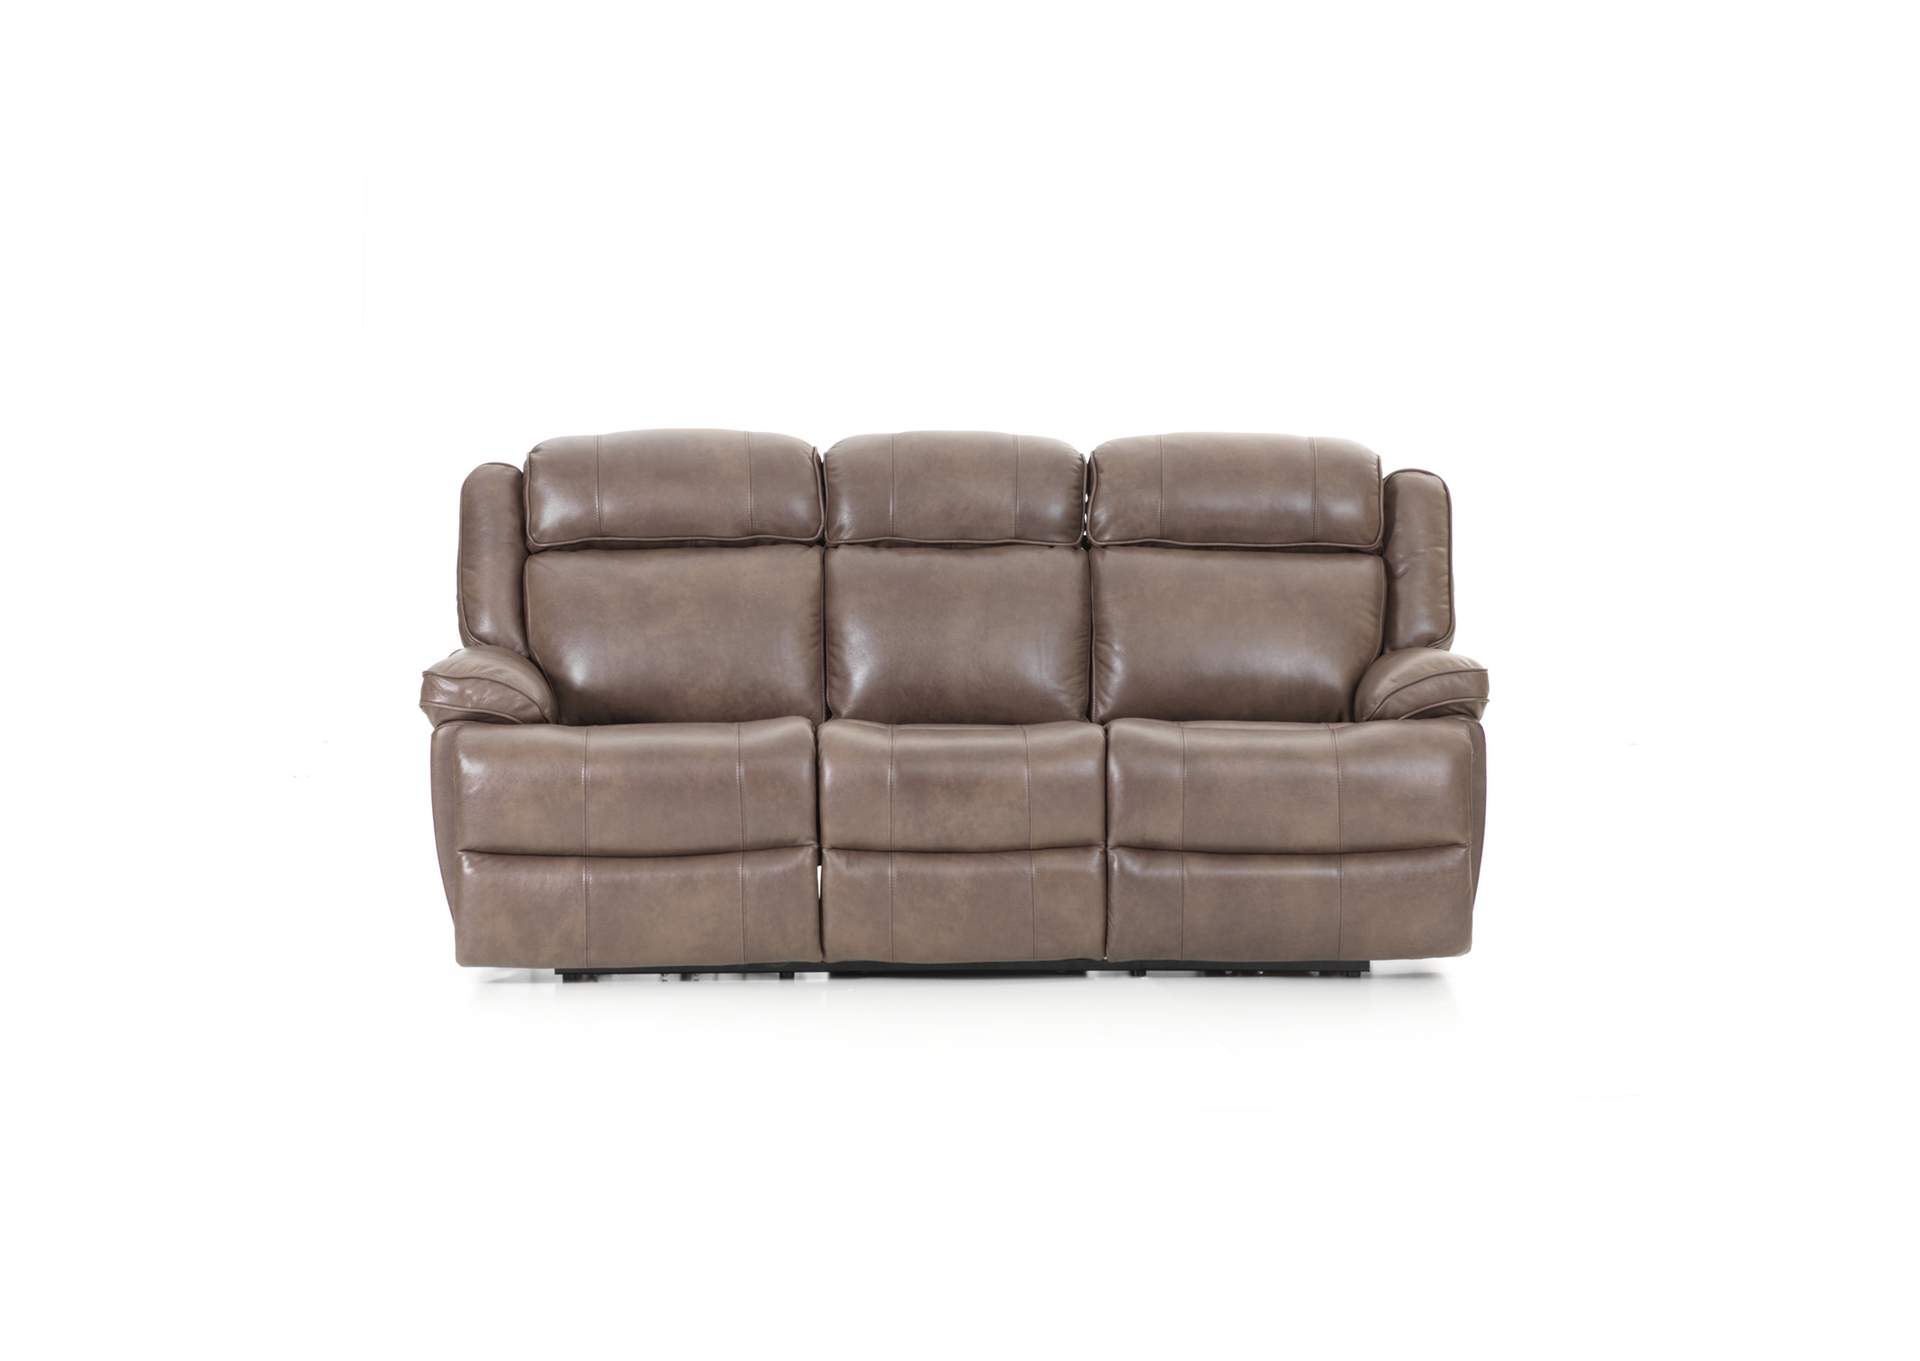 Dual Power Reclining Sofa,Intercon Furniture